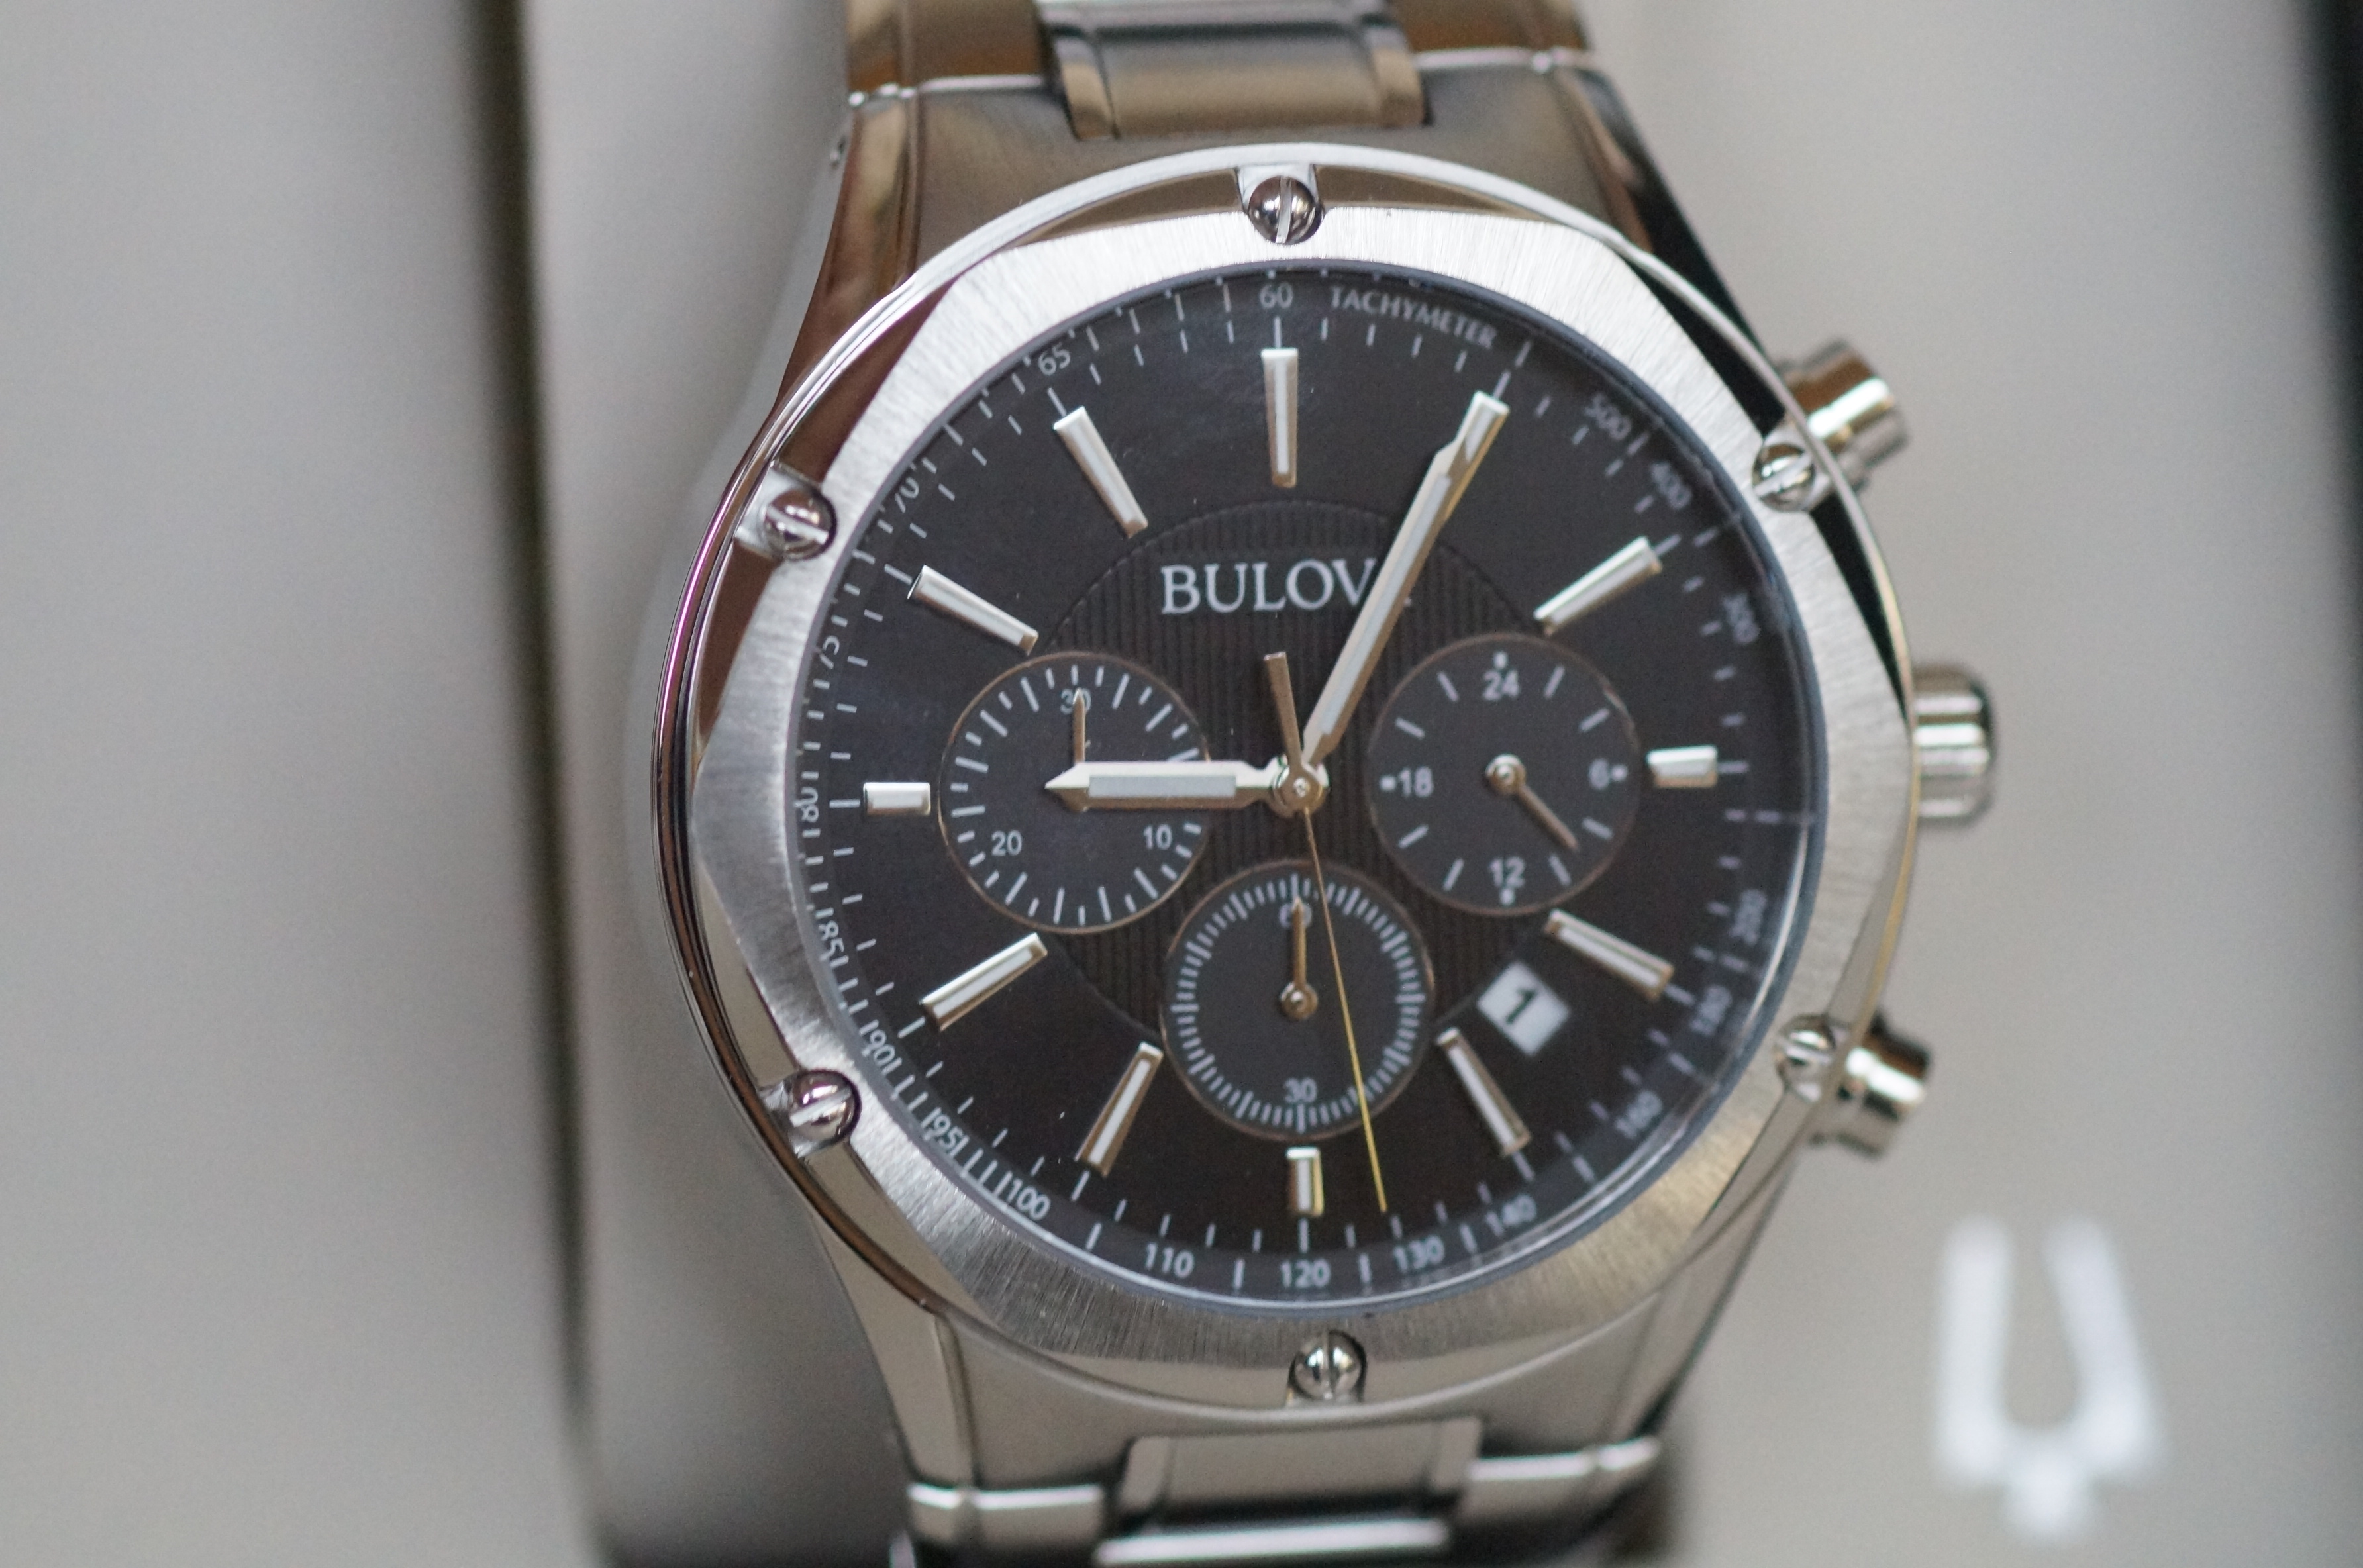 Gents Bulova chronograph wristwatch